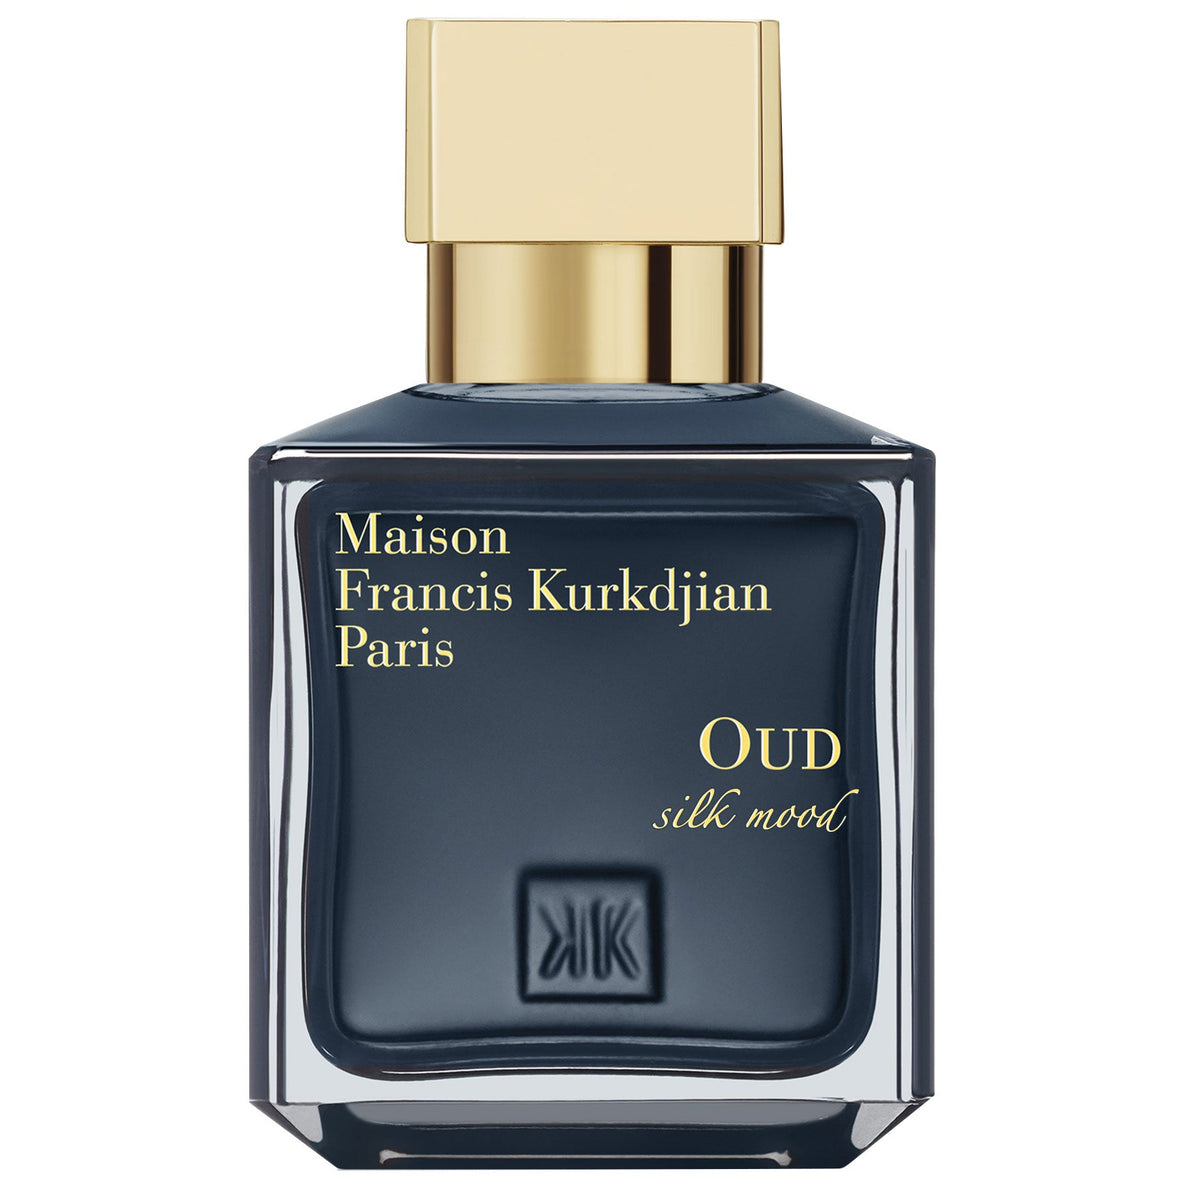 Maison Francis Kurkdjian Oud Silk Mood Eau de Parfum Spray